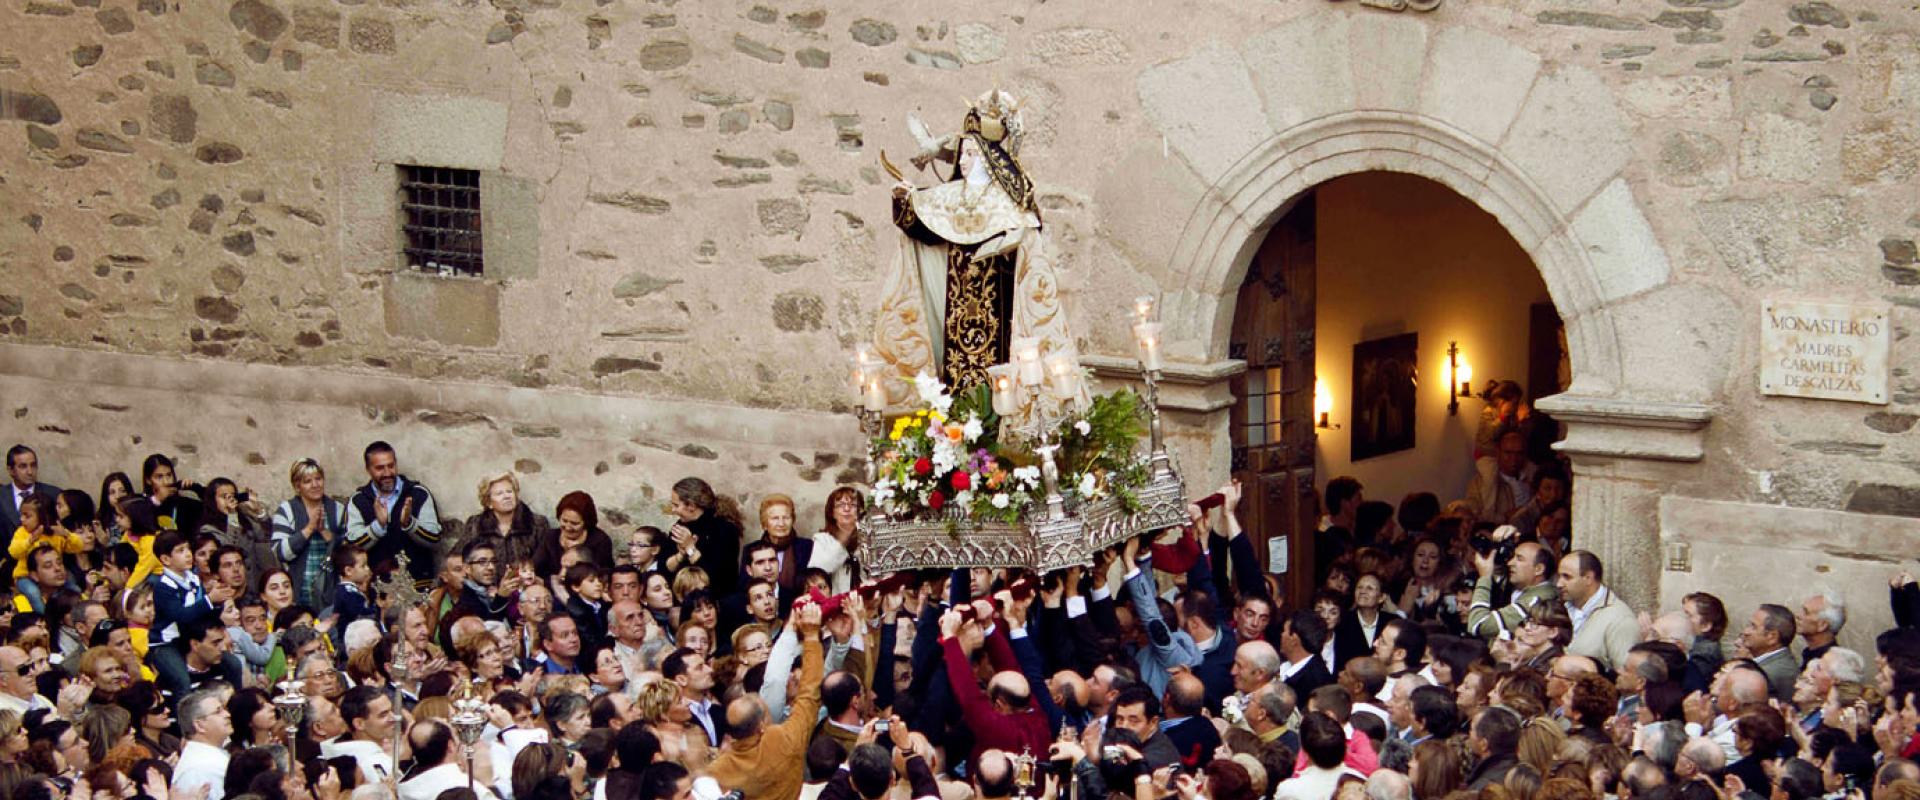 Patron Saint's festivities of Alba de Tormes